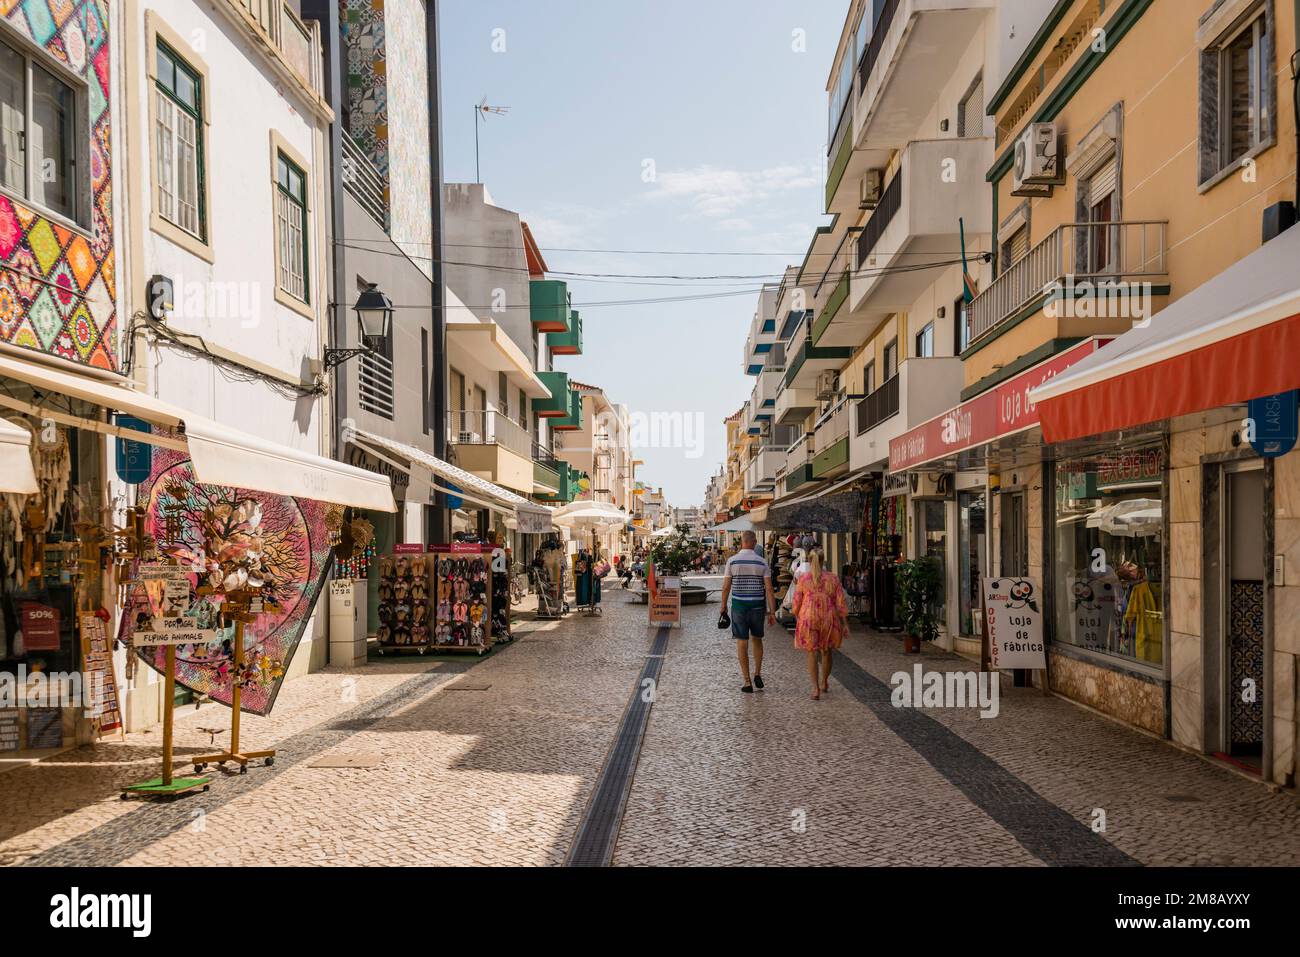 Pedestrianised street lined with shops, Vila Real de Santo Antonio, Algarve, Portugal Stock Photo